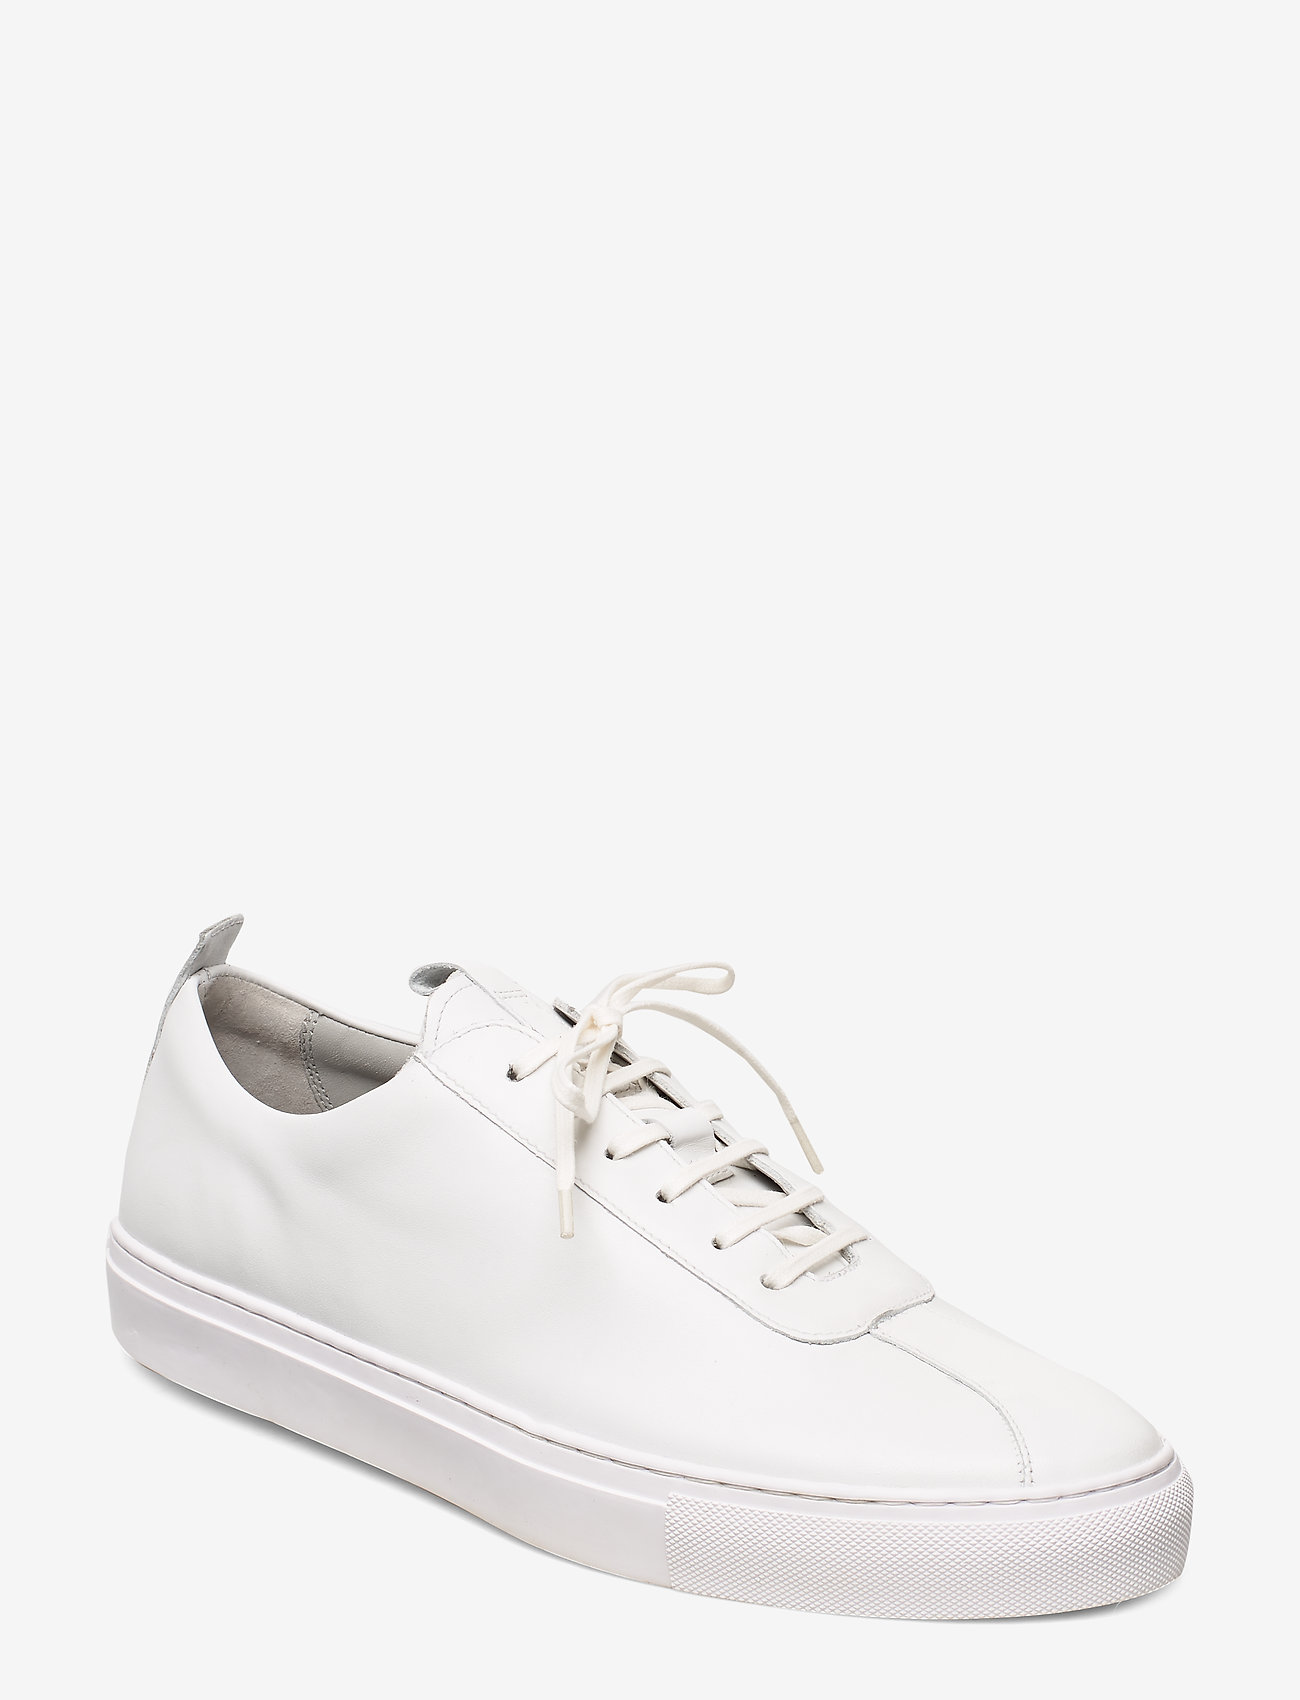 grenson white sneakers